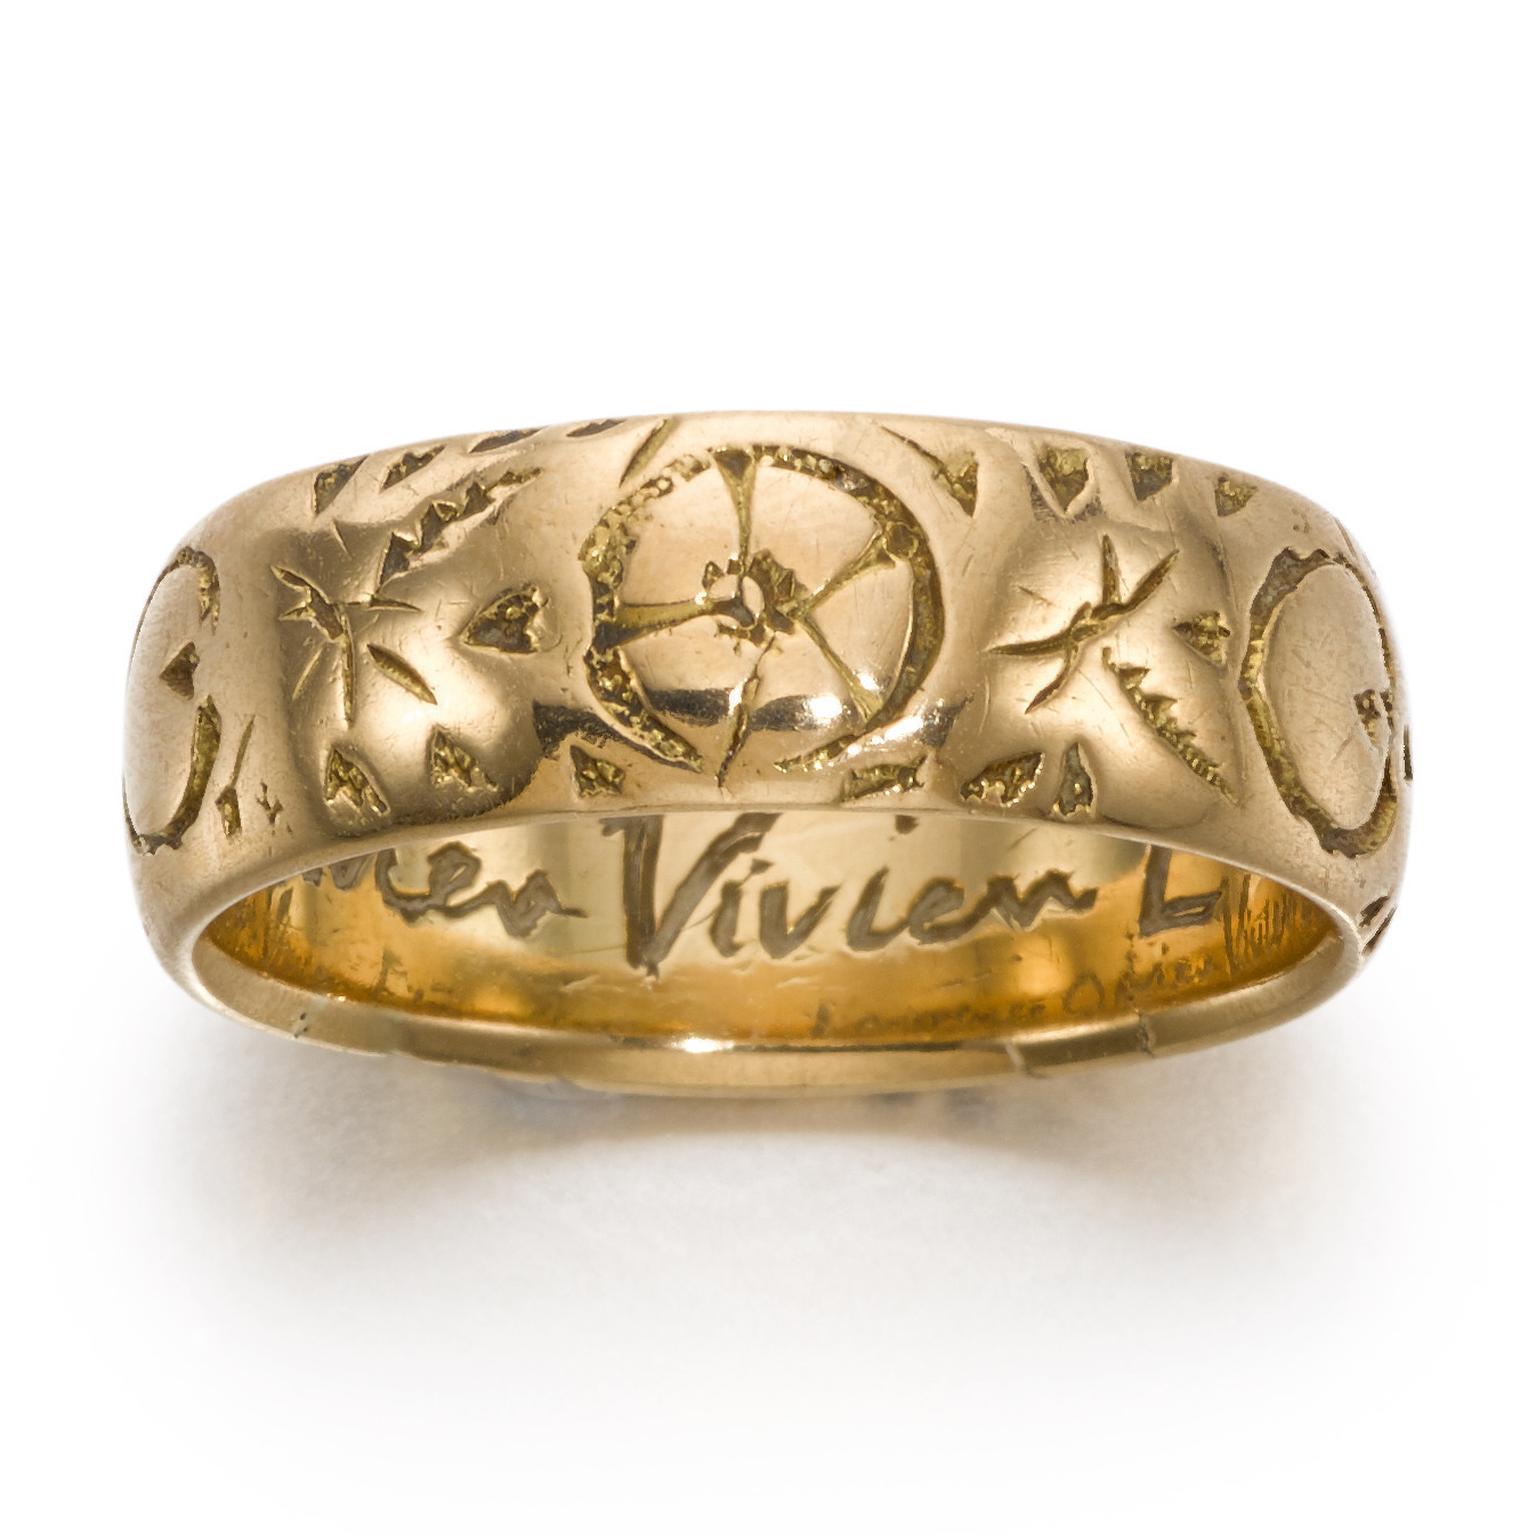 Vivien Leigh gold Eternally ring